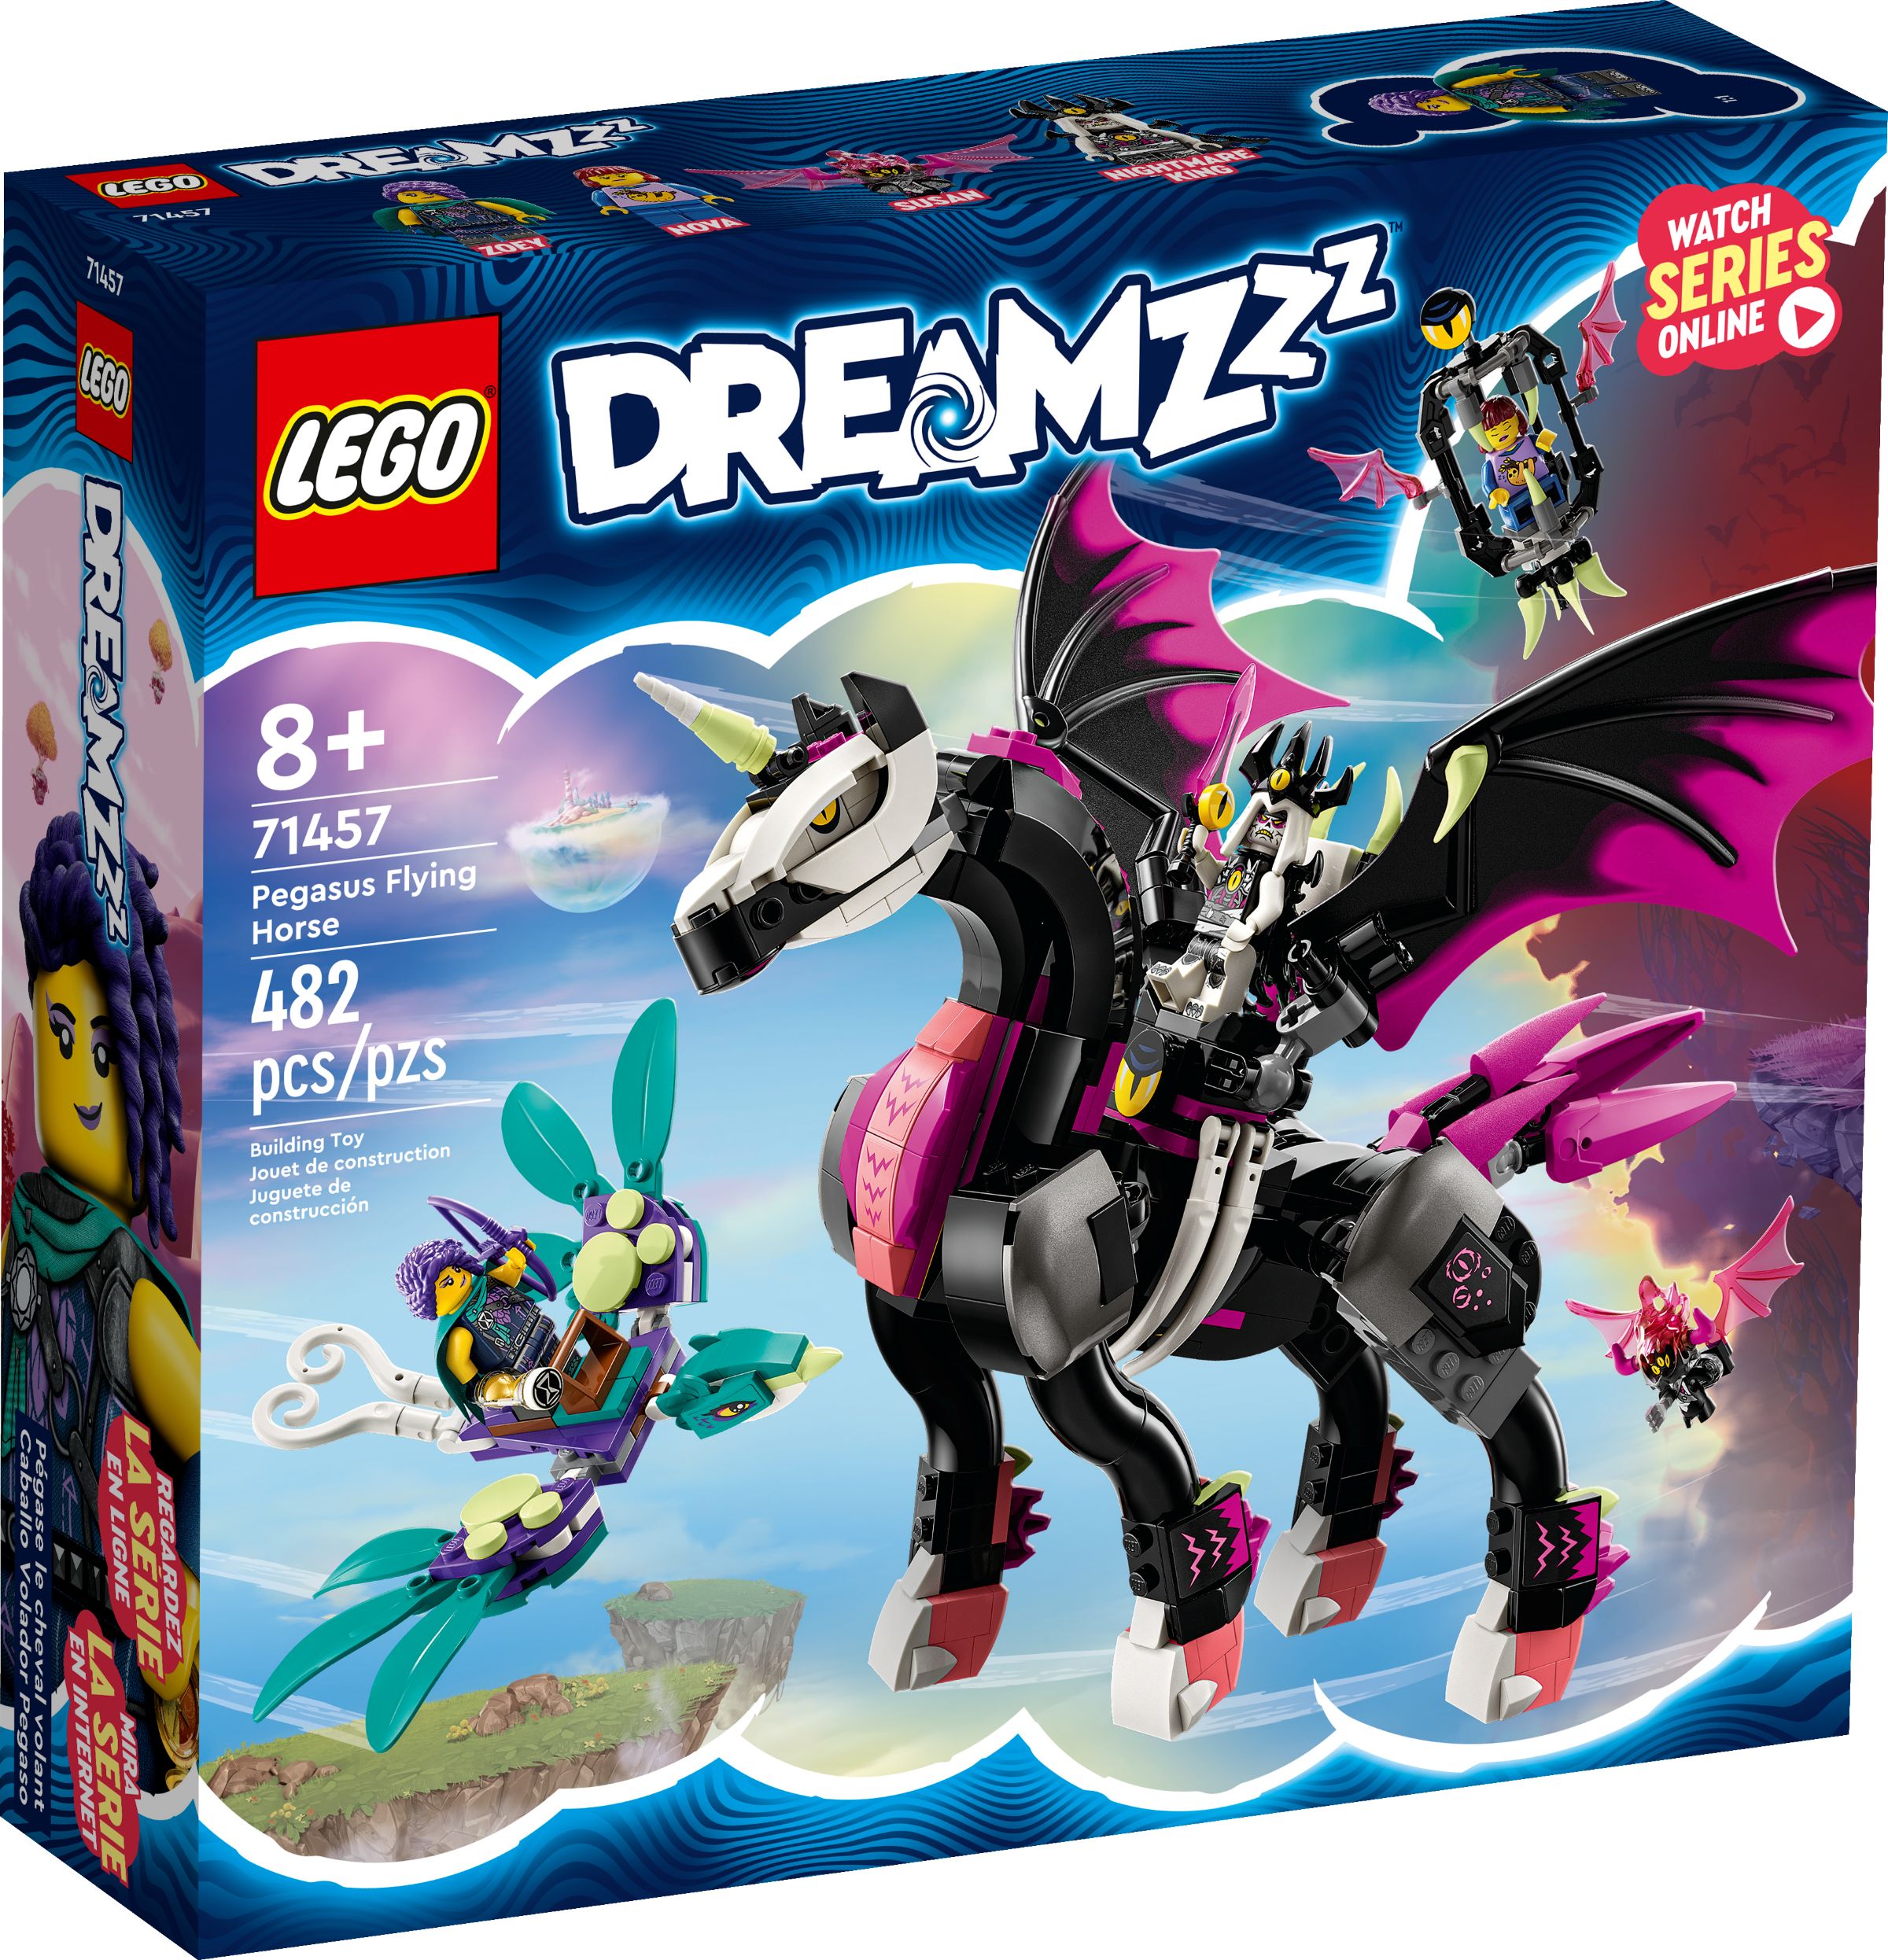 LEGO Dreamzzz 71457 Pegasus LEGO_71457_alt1.jpg